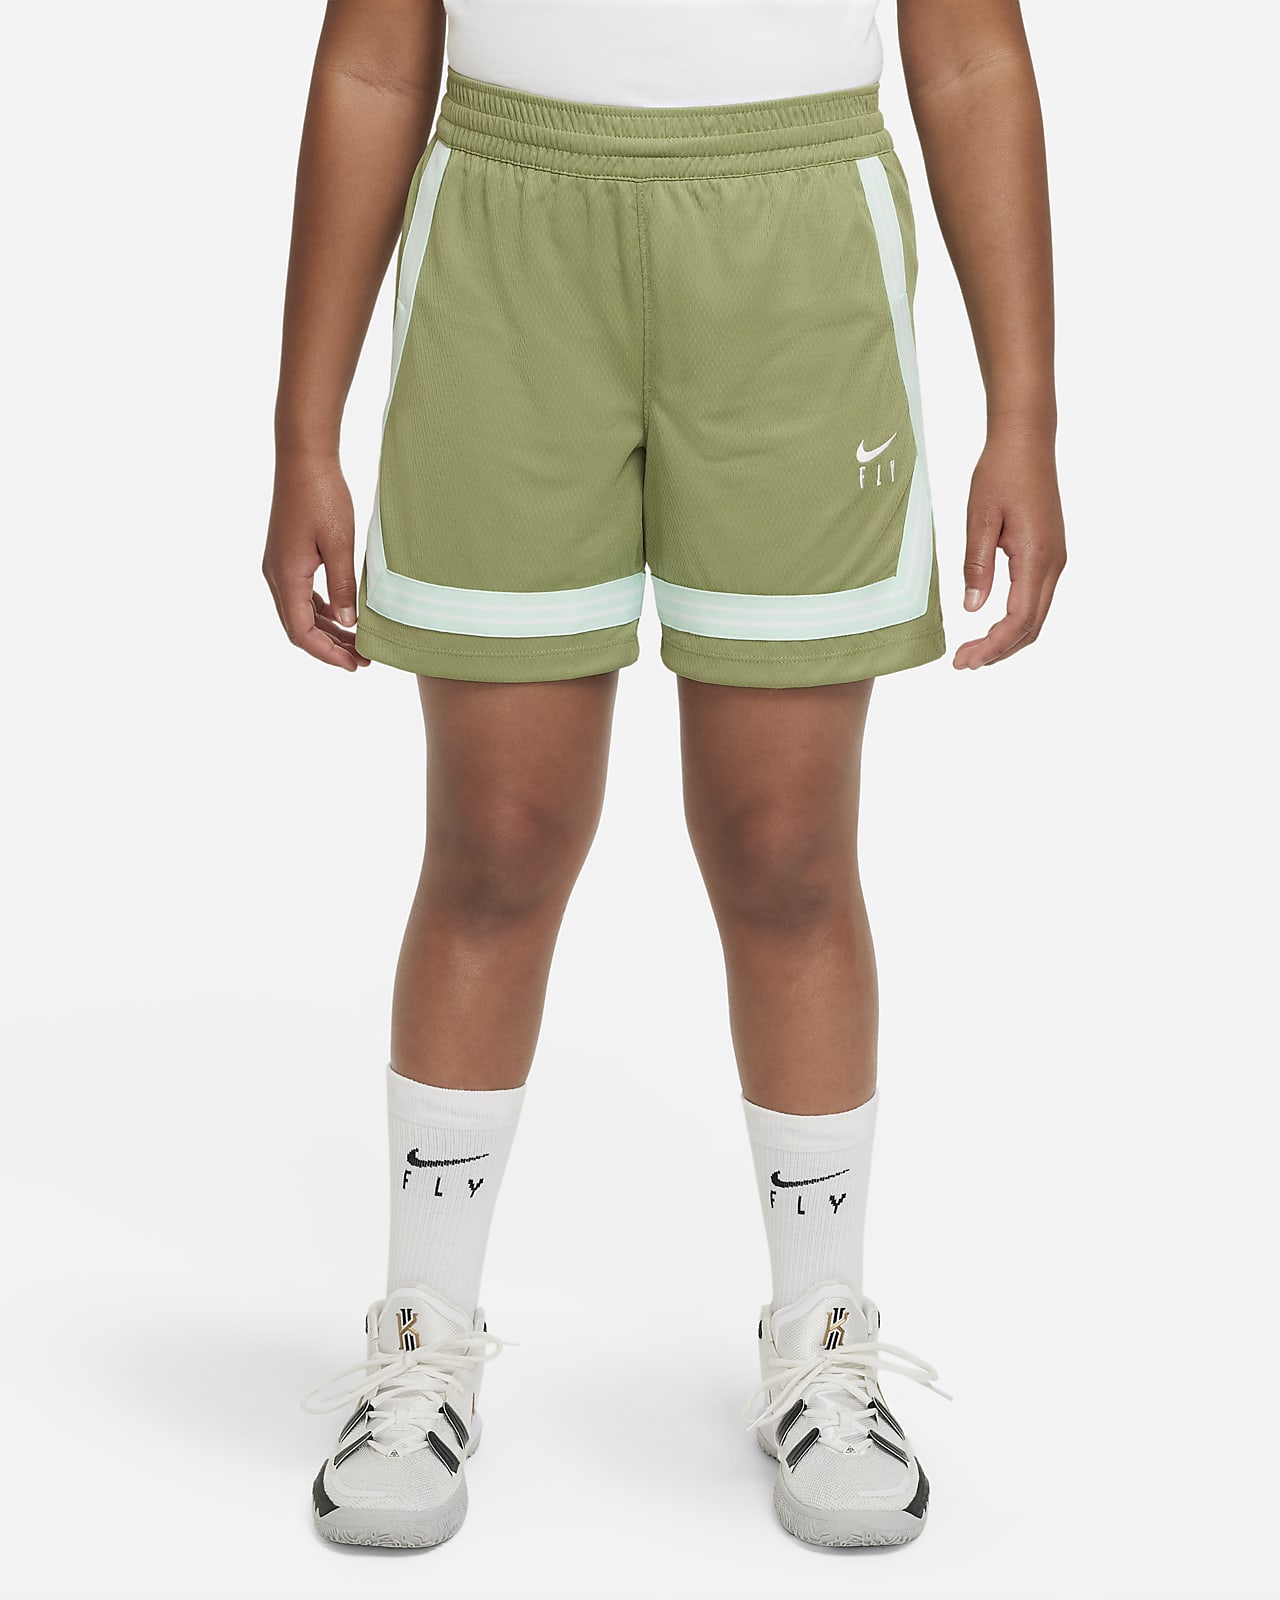 Nike mens short inseam athletic pants + FREE SHIPPING | Zappos.com